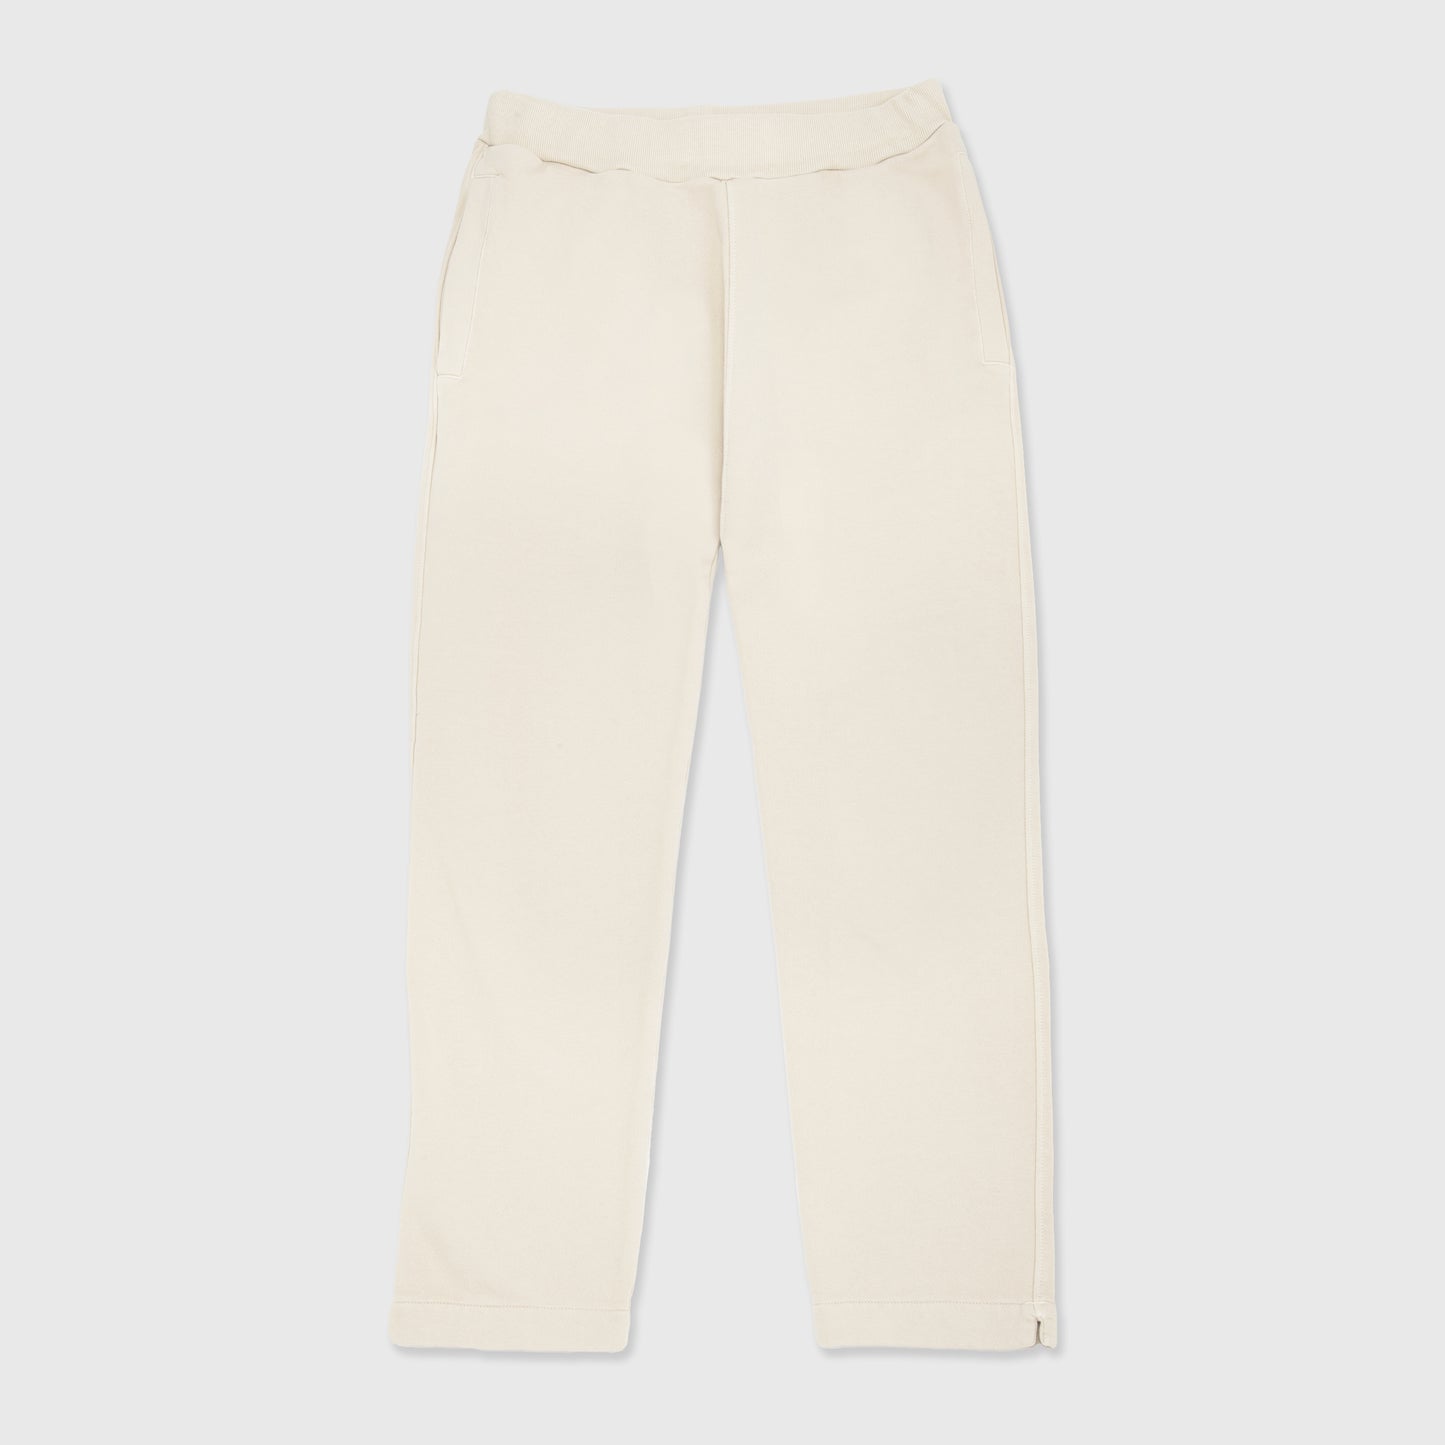 Cotton Fleece Sweatpants with Drawstrings Waistband Calce